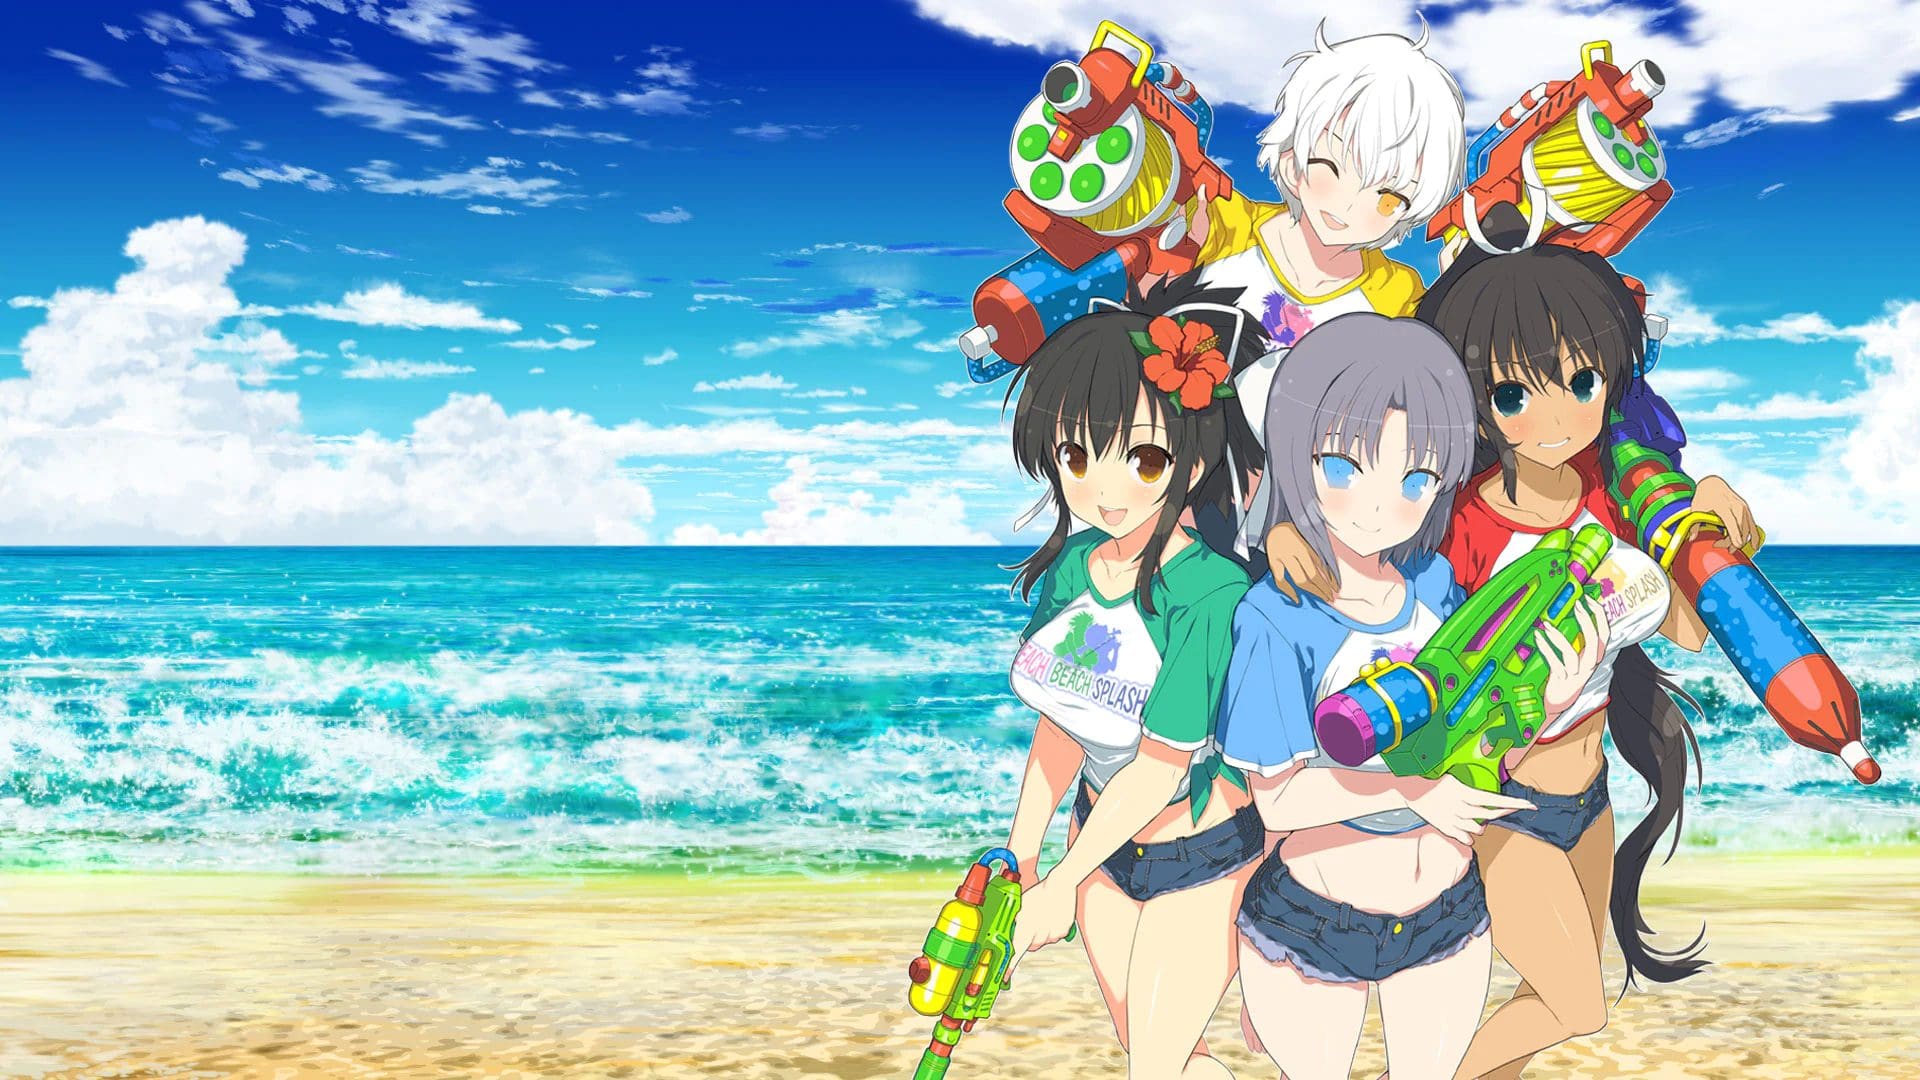 Senran Kagura Peach Beach Splash - No Shirt | XSEED Games | GameStop